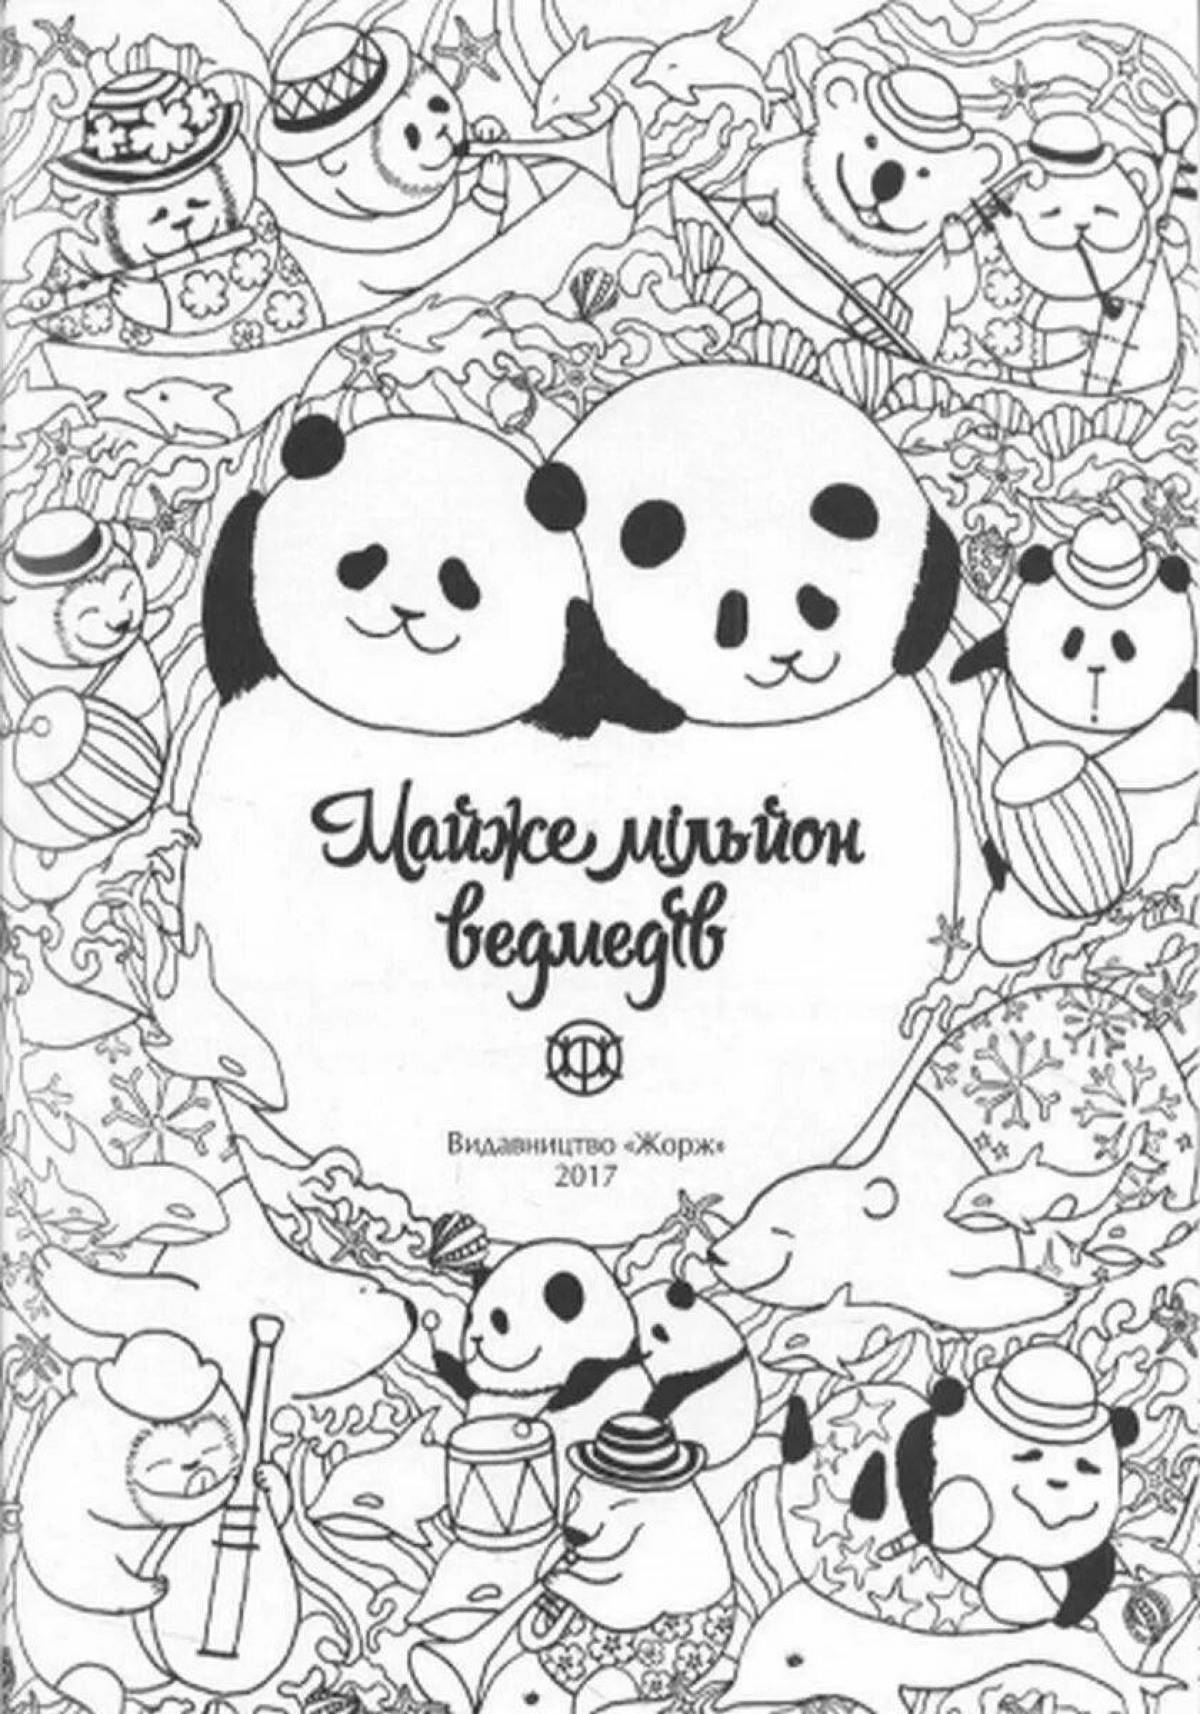 Million bears adorable coloring book